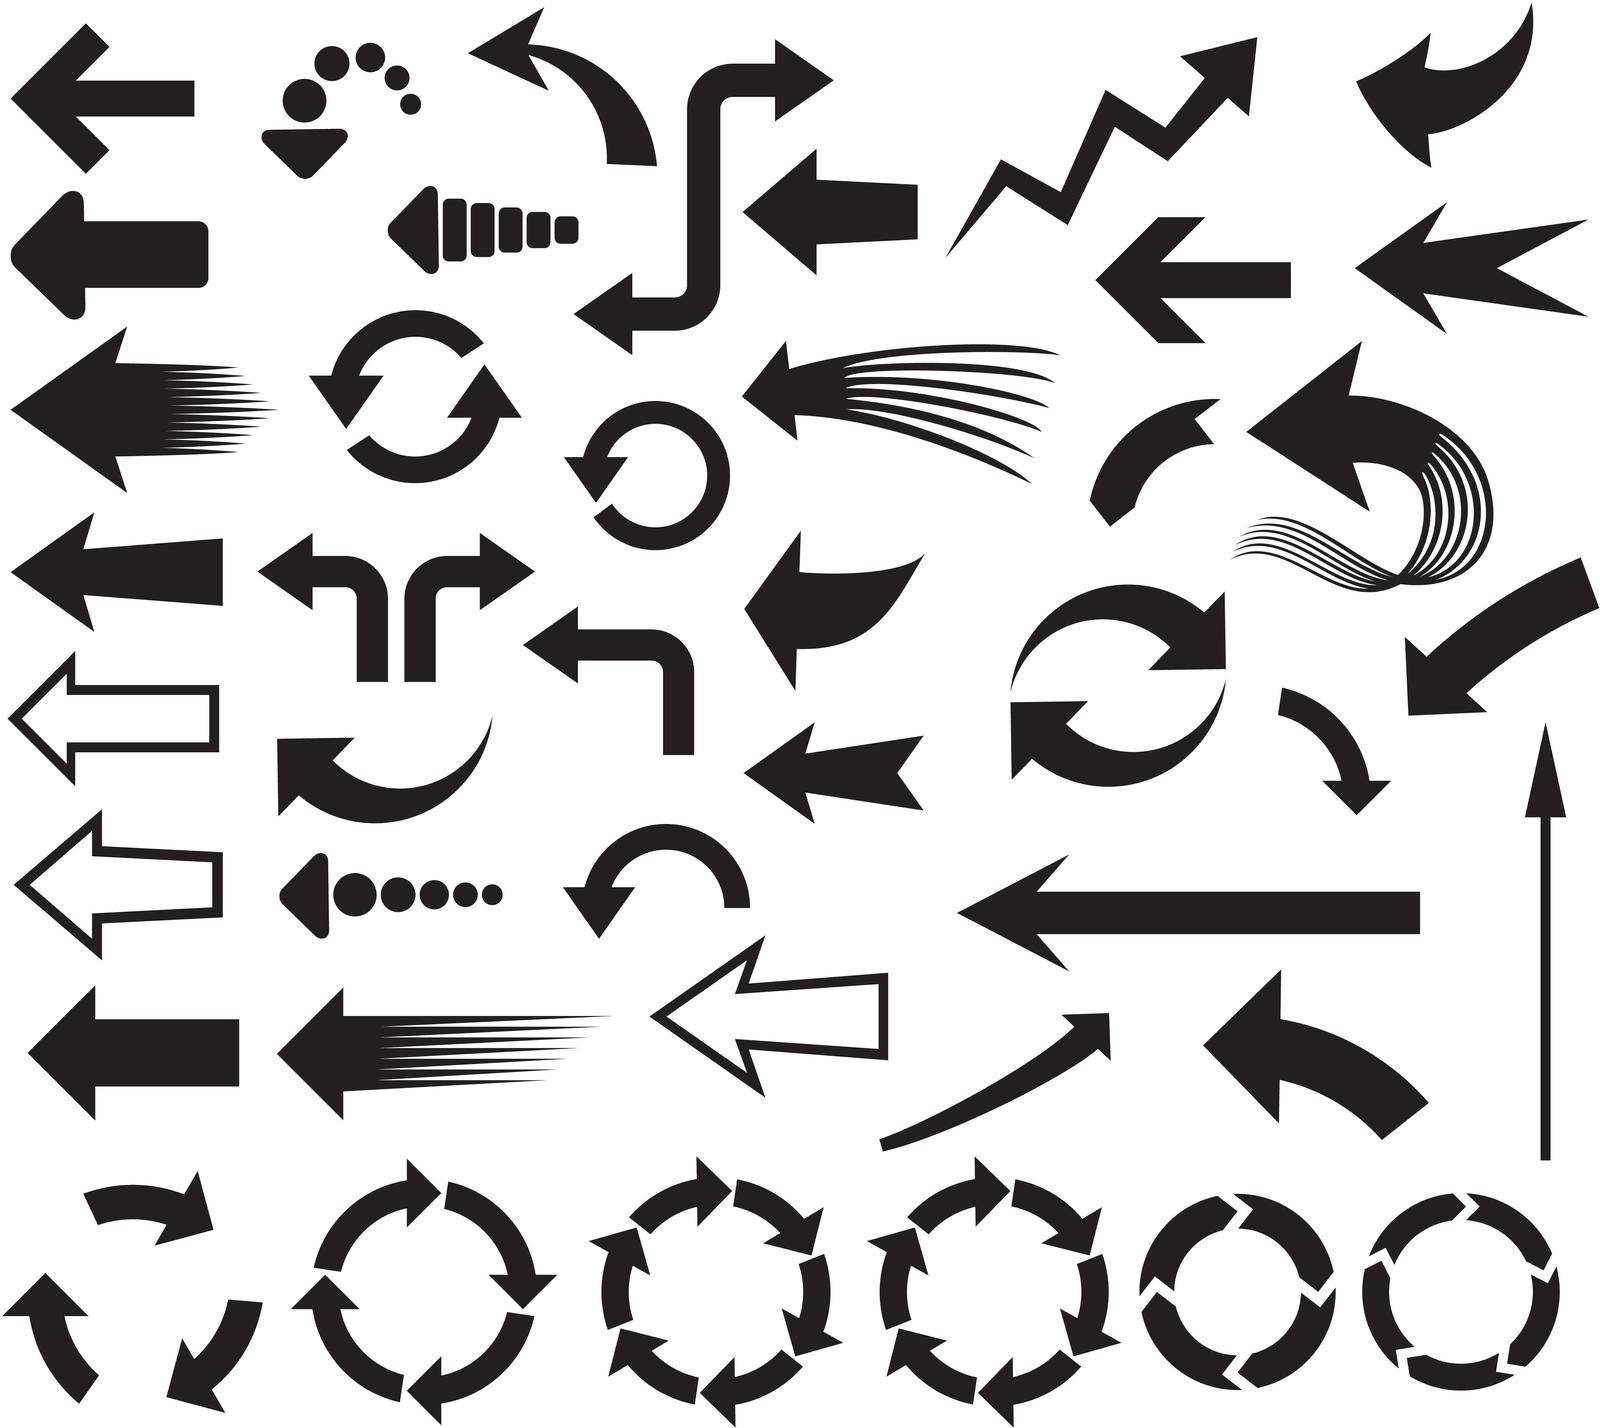 Arrows icons set vector illustration